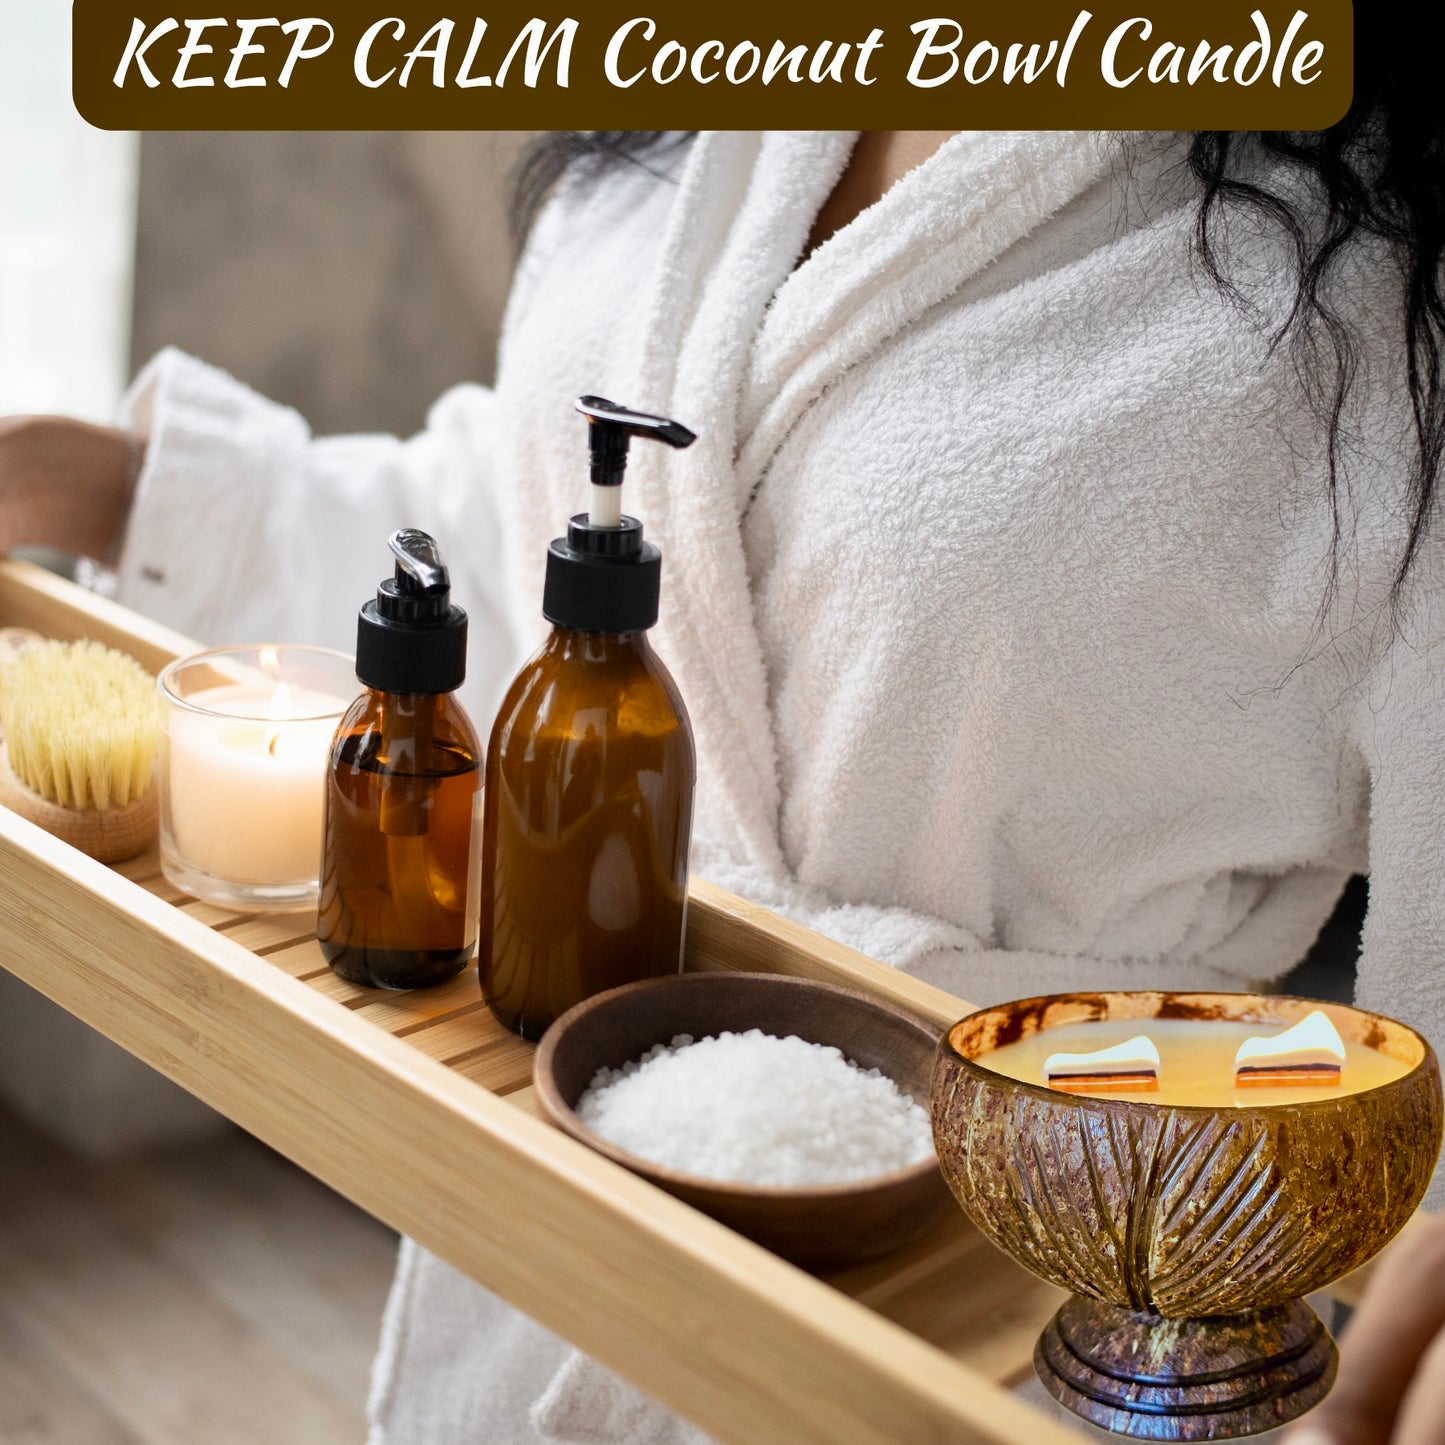 KEEP CALM Coconut Bowl Candle